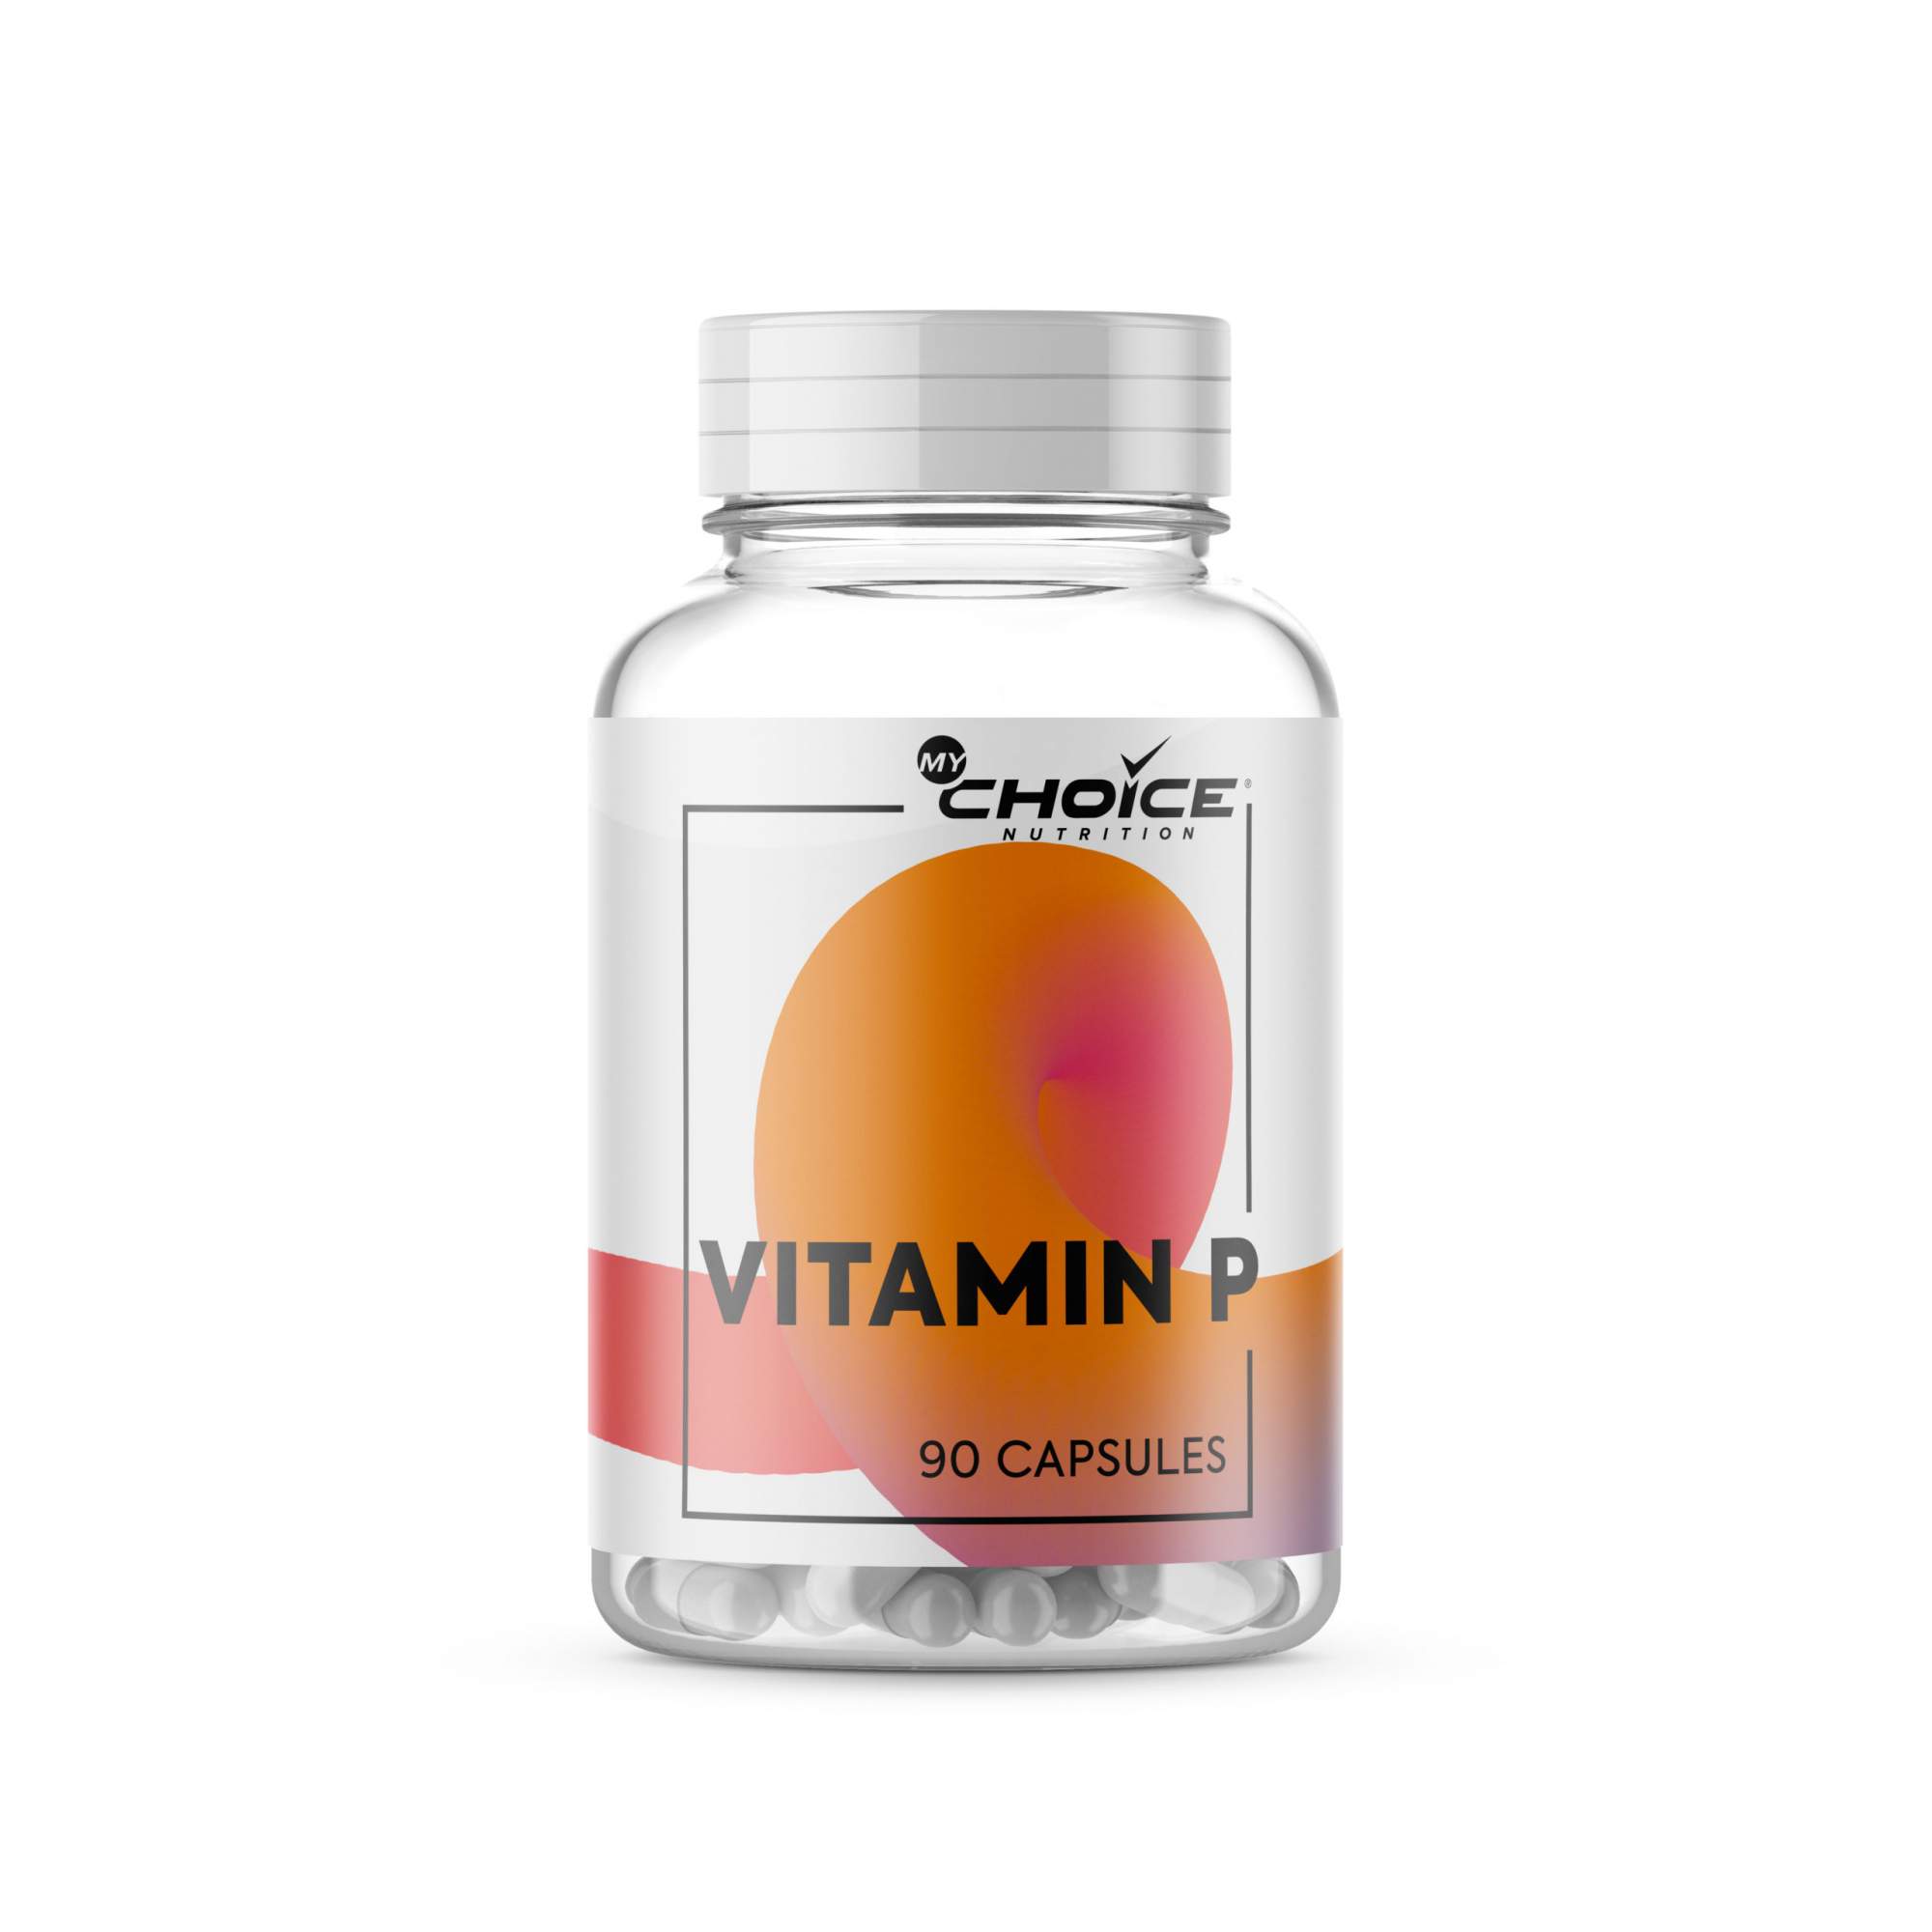 P vitamin. Витамин p купить. Витамин p в ампулах. Витамины LSP. Витамин p для чего.